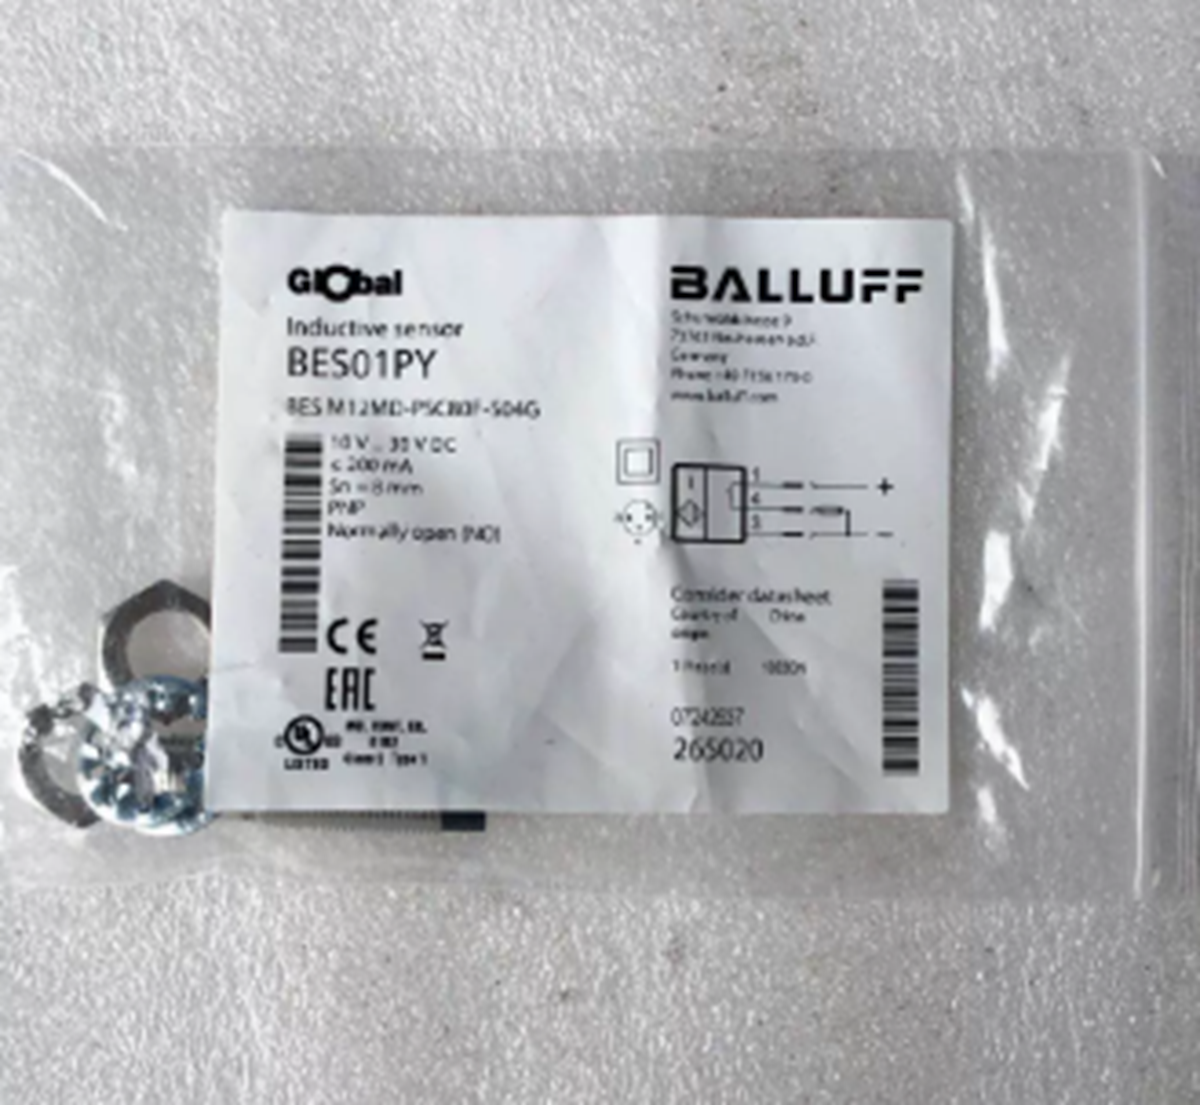 Balluff BES M12MD-PSC80F-S04G Inductive Sensor